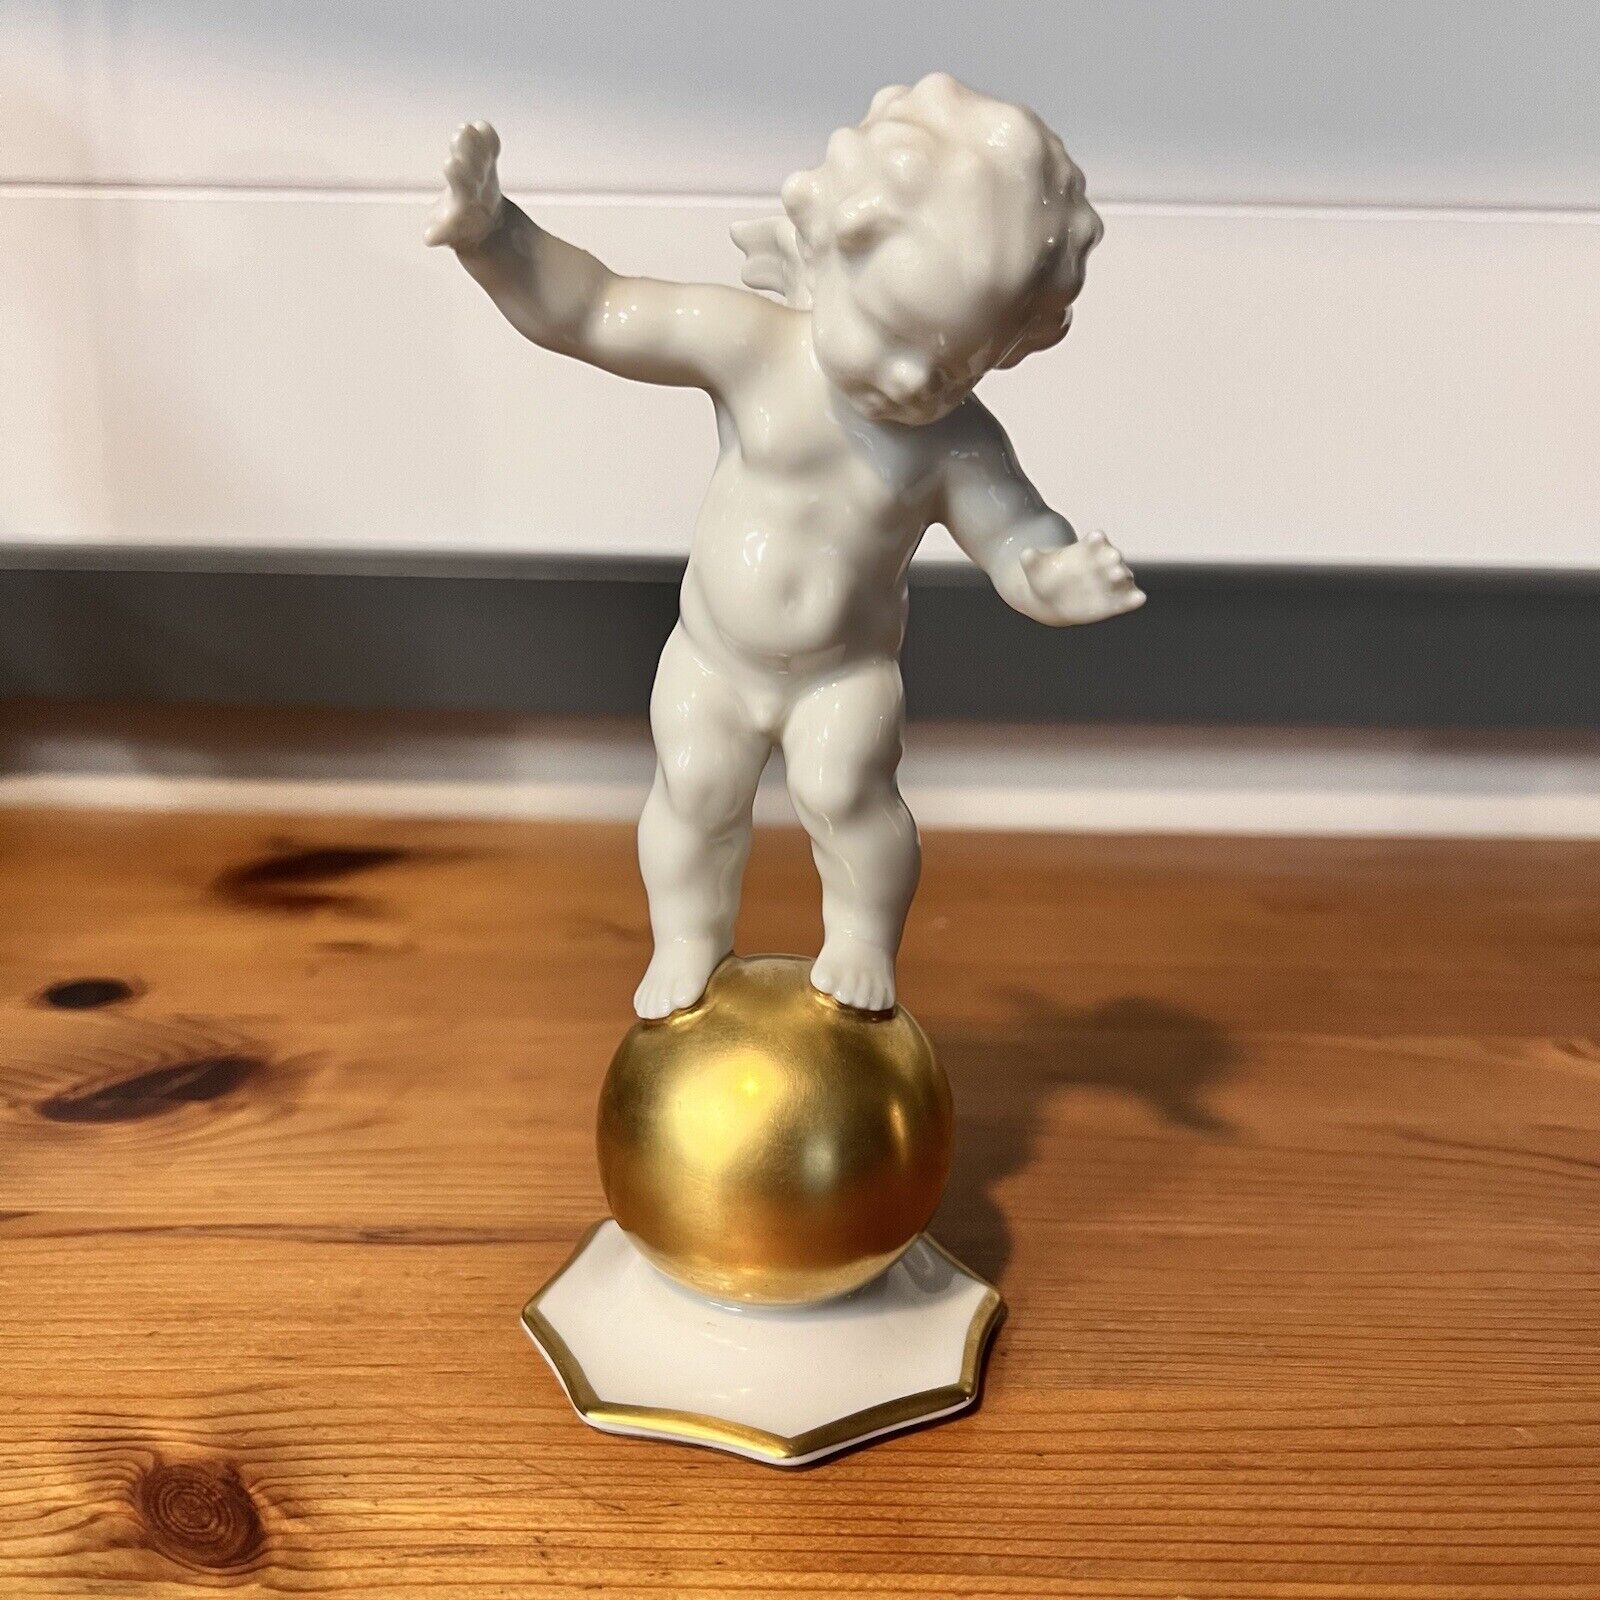 Hutschenreuter Cherub Balancing on Golden Ball Porcelain Figurine 1930s Germany